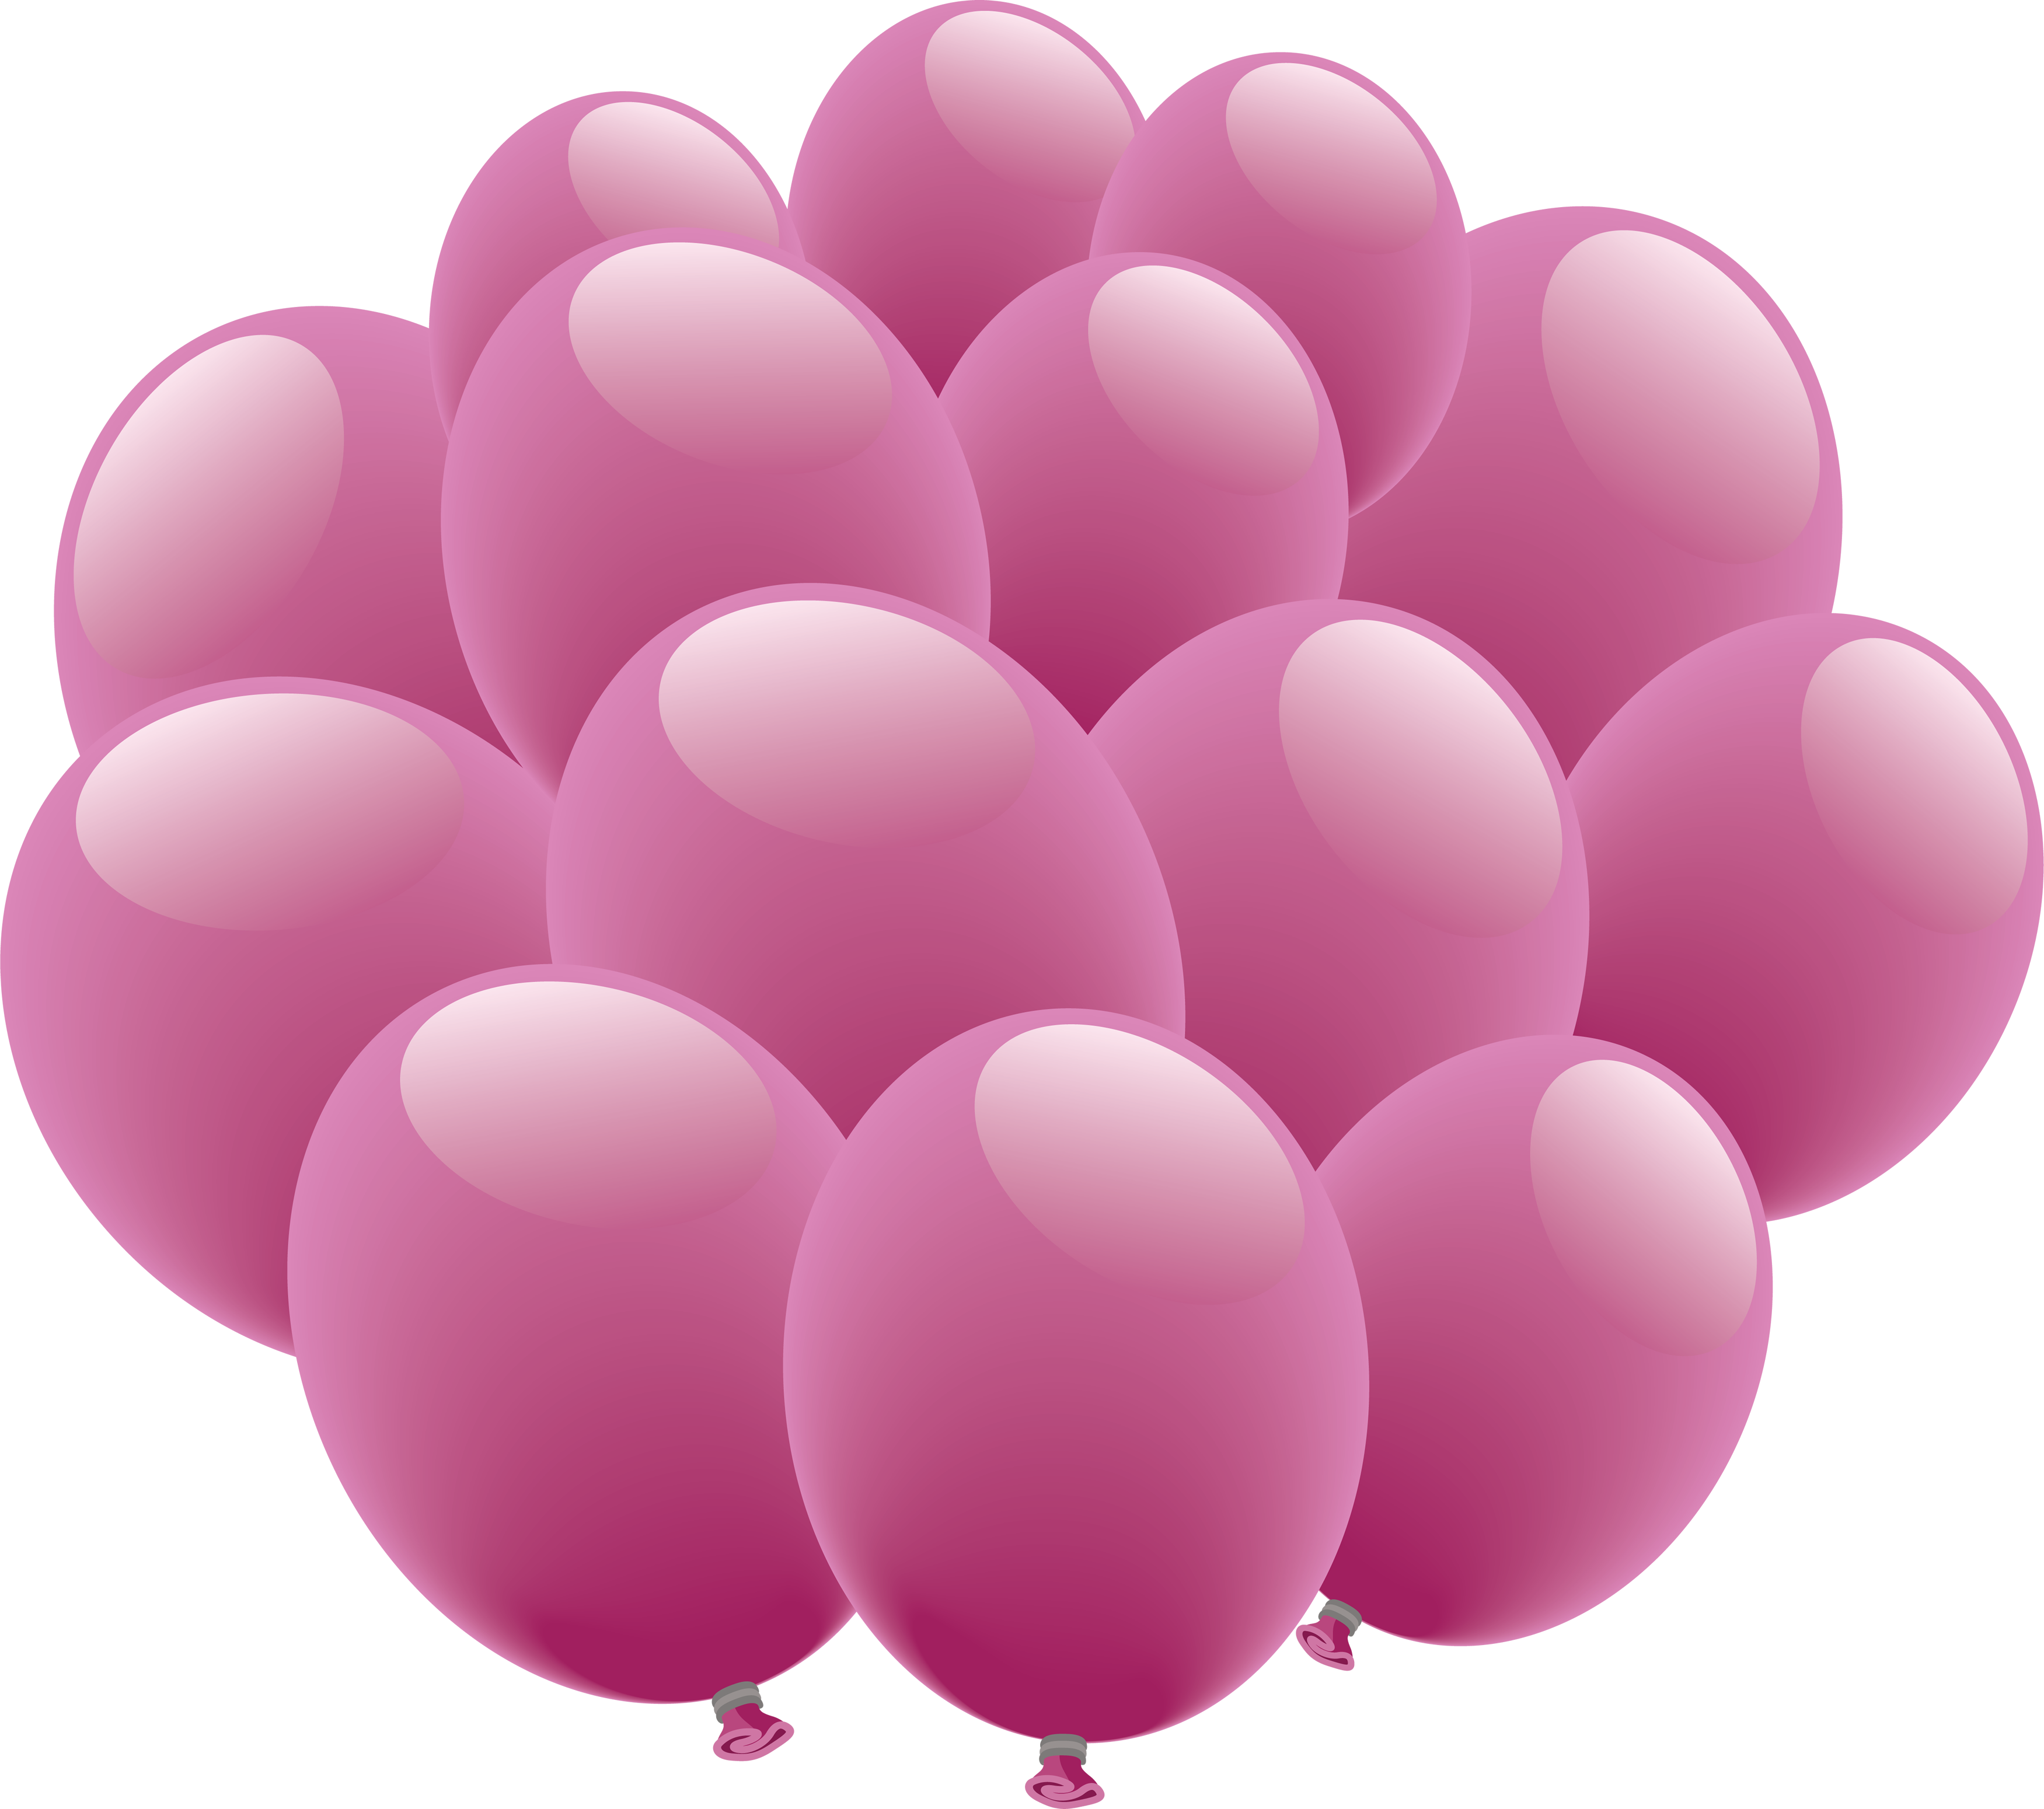 Many Pink Celebration Balloons PNG Image